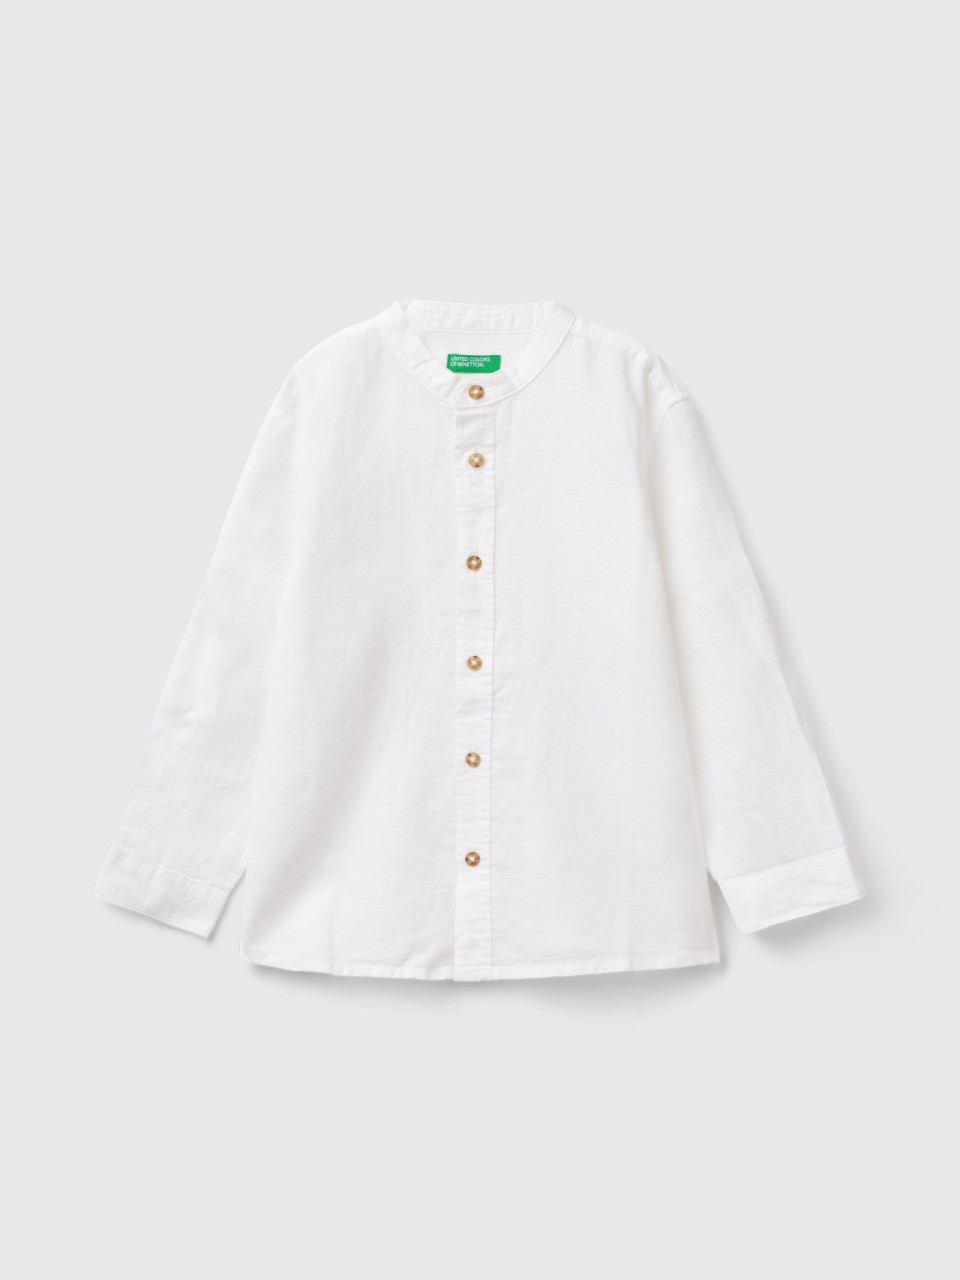 Benetton, Mandarin Collar Shirt In Linen Blend, White, Kids